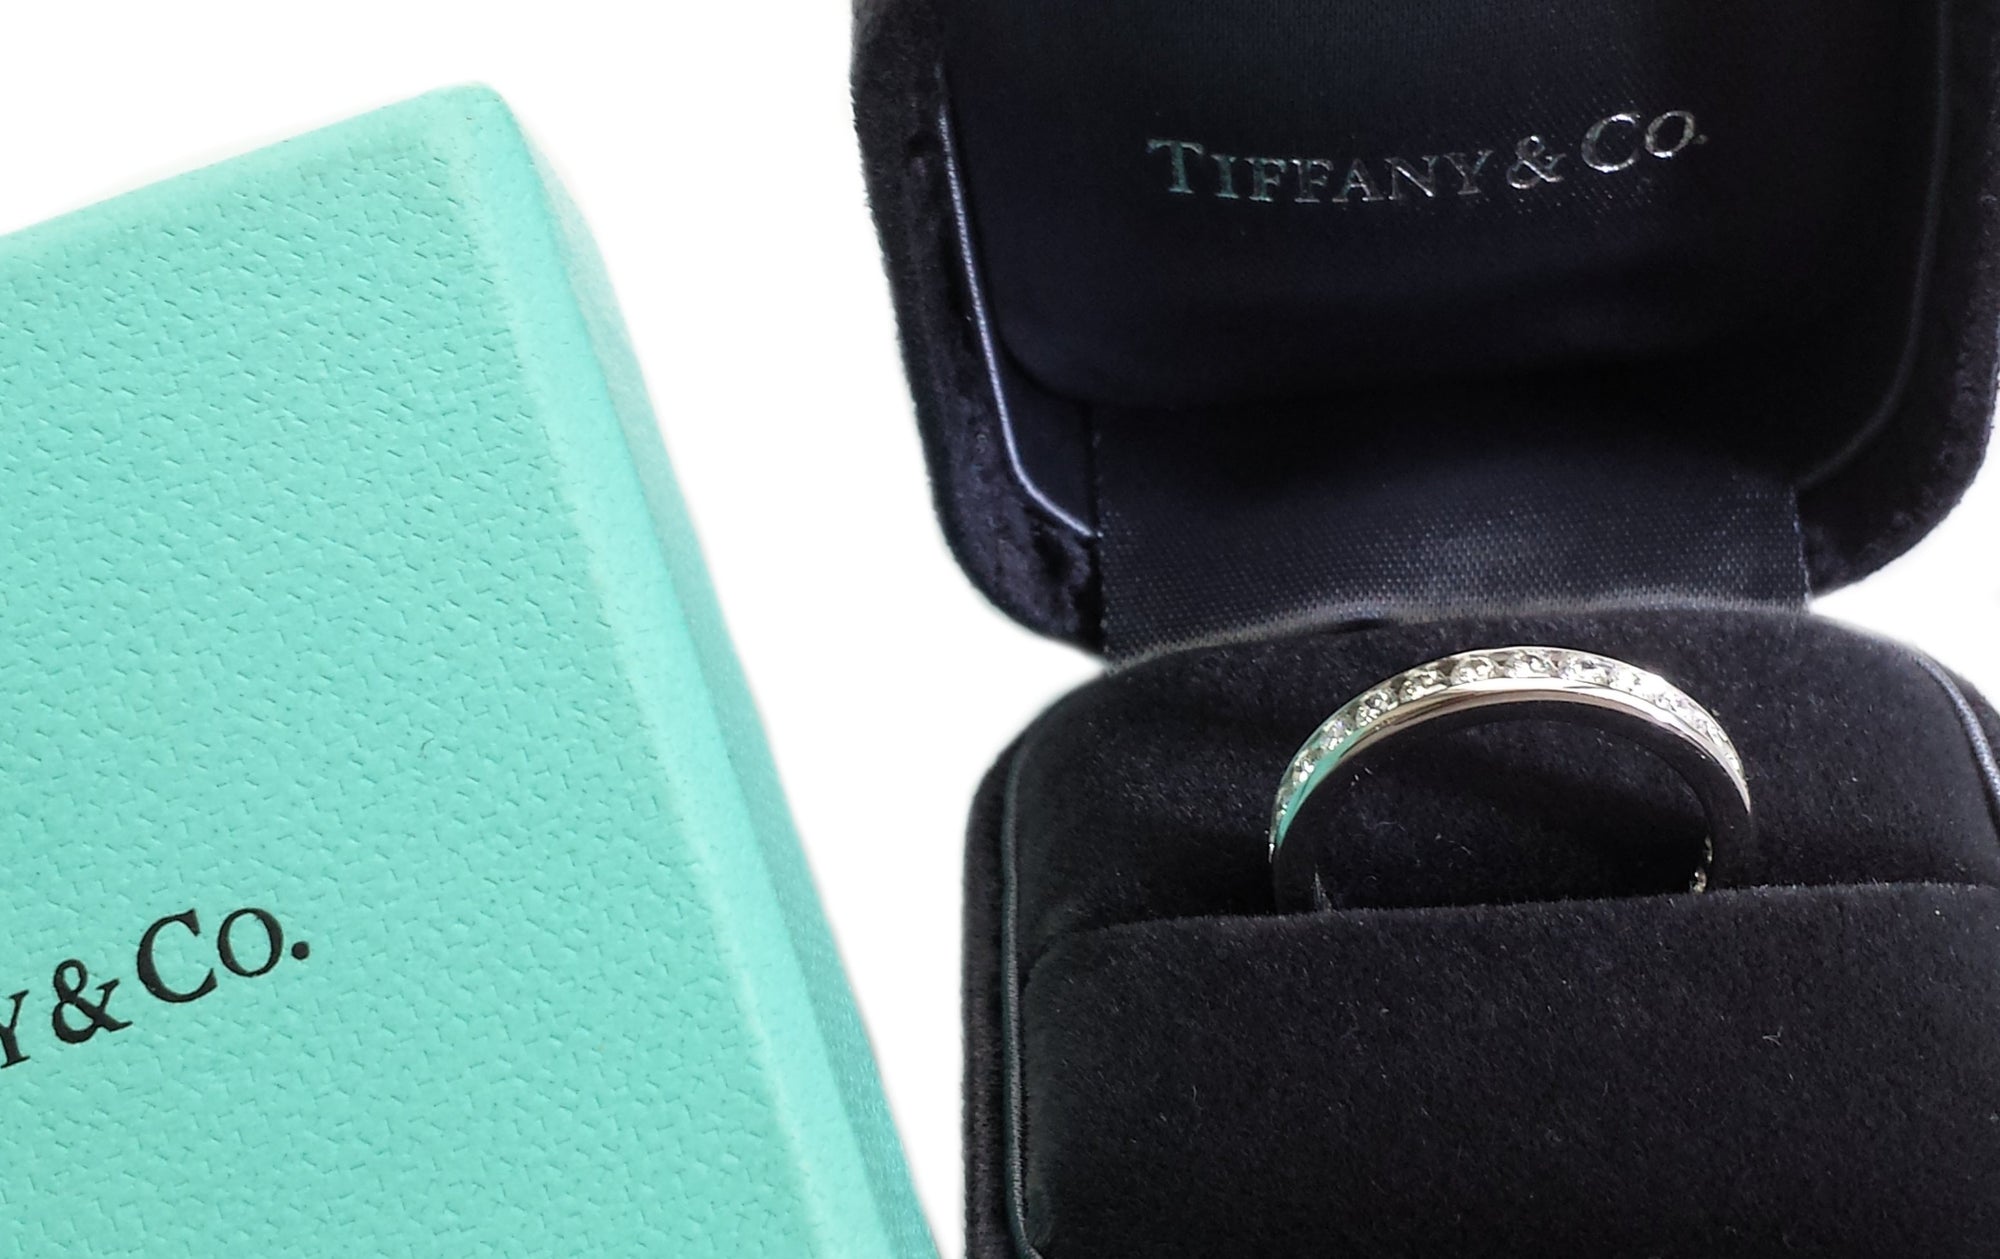 Tiffany & Co 3mm Channel Set Diamond Wedding Band